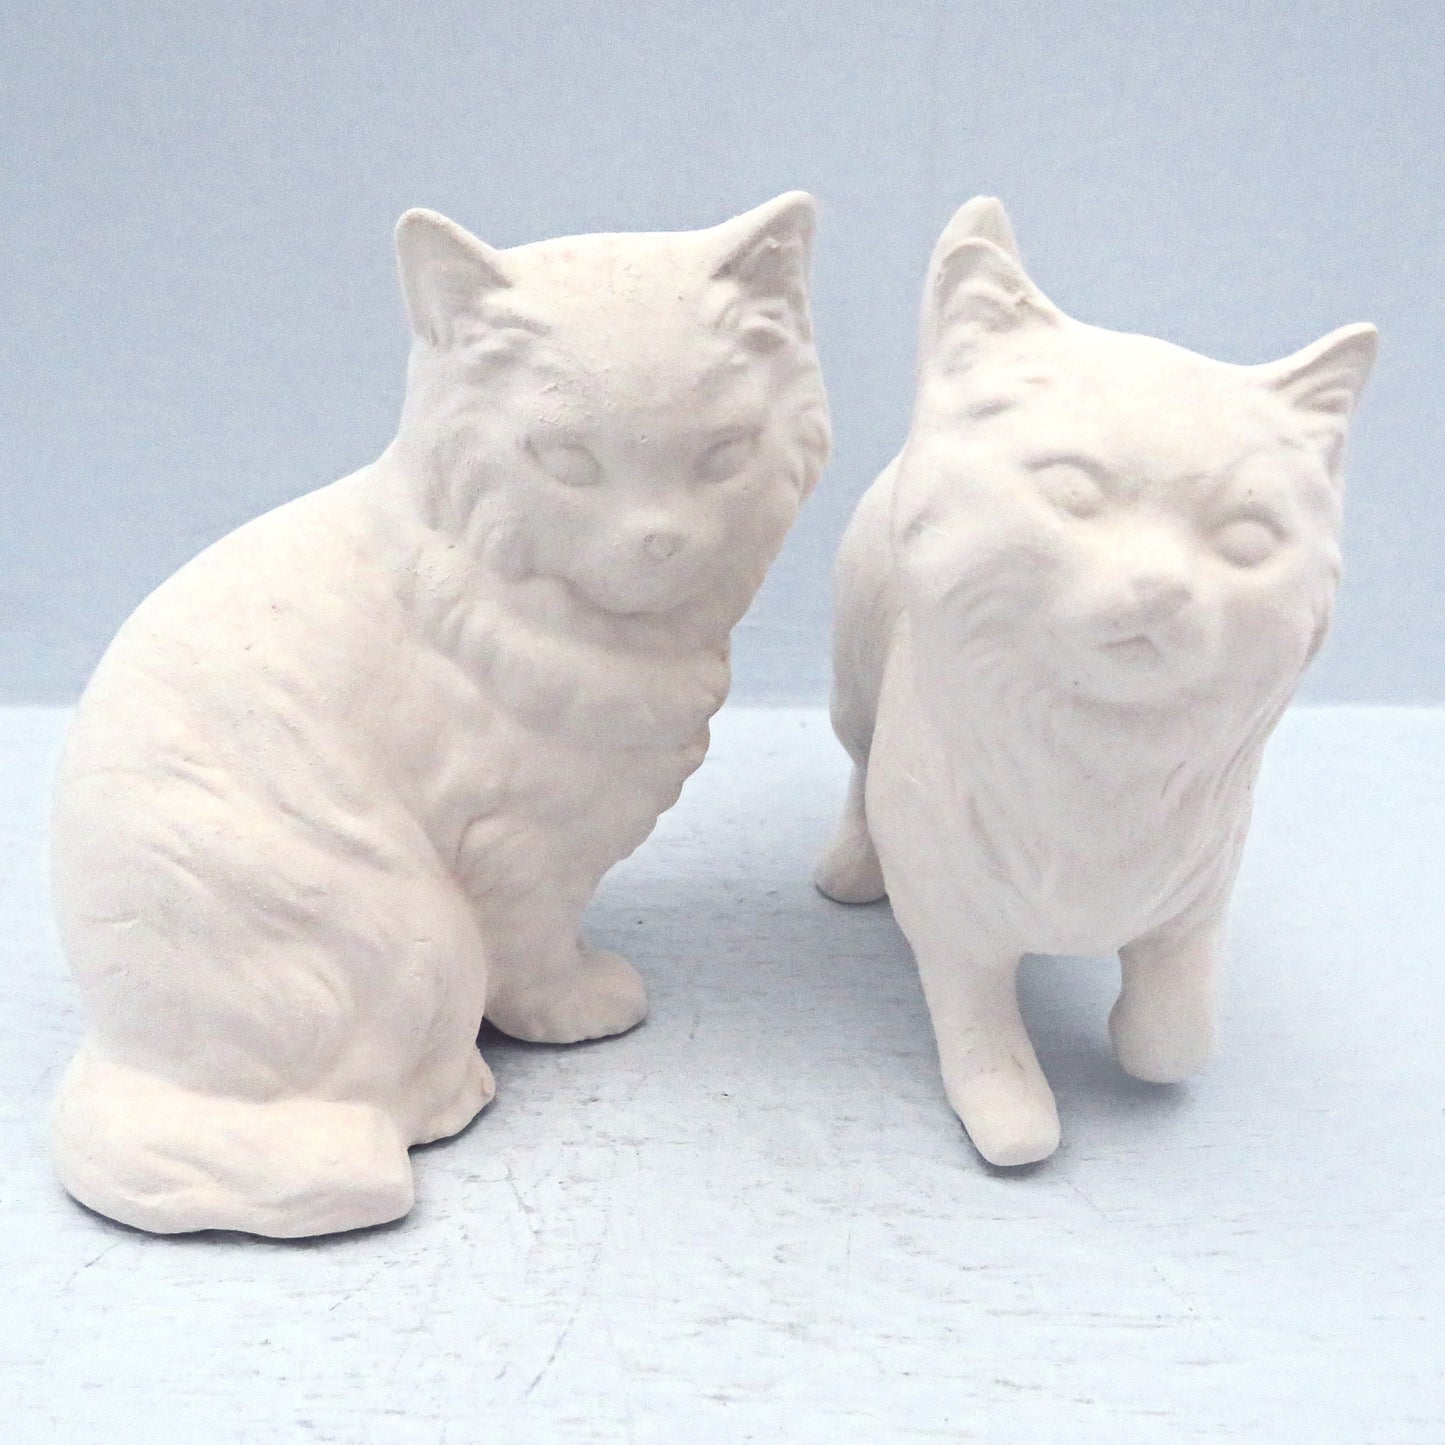 Unpainted Ceramic Cat Figurines / Bisqueware Cat Statues / Ready to Paint Ceramic Cats / Ceramics to Paint / Paint It Yourself / Cat Decor